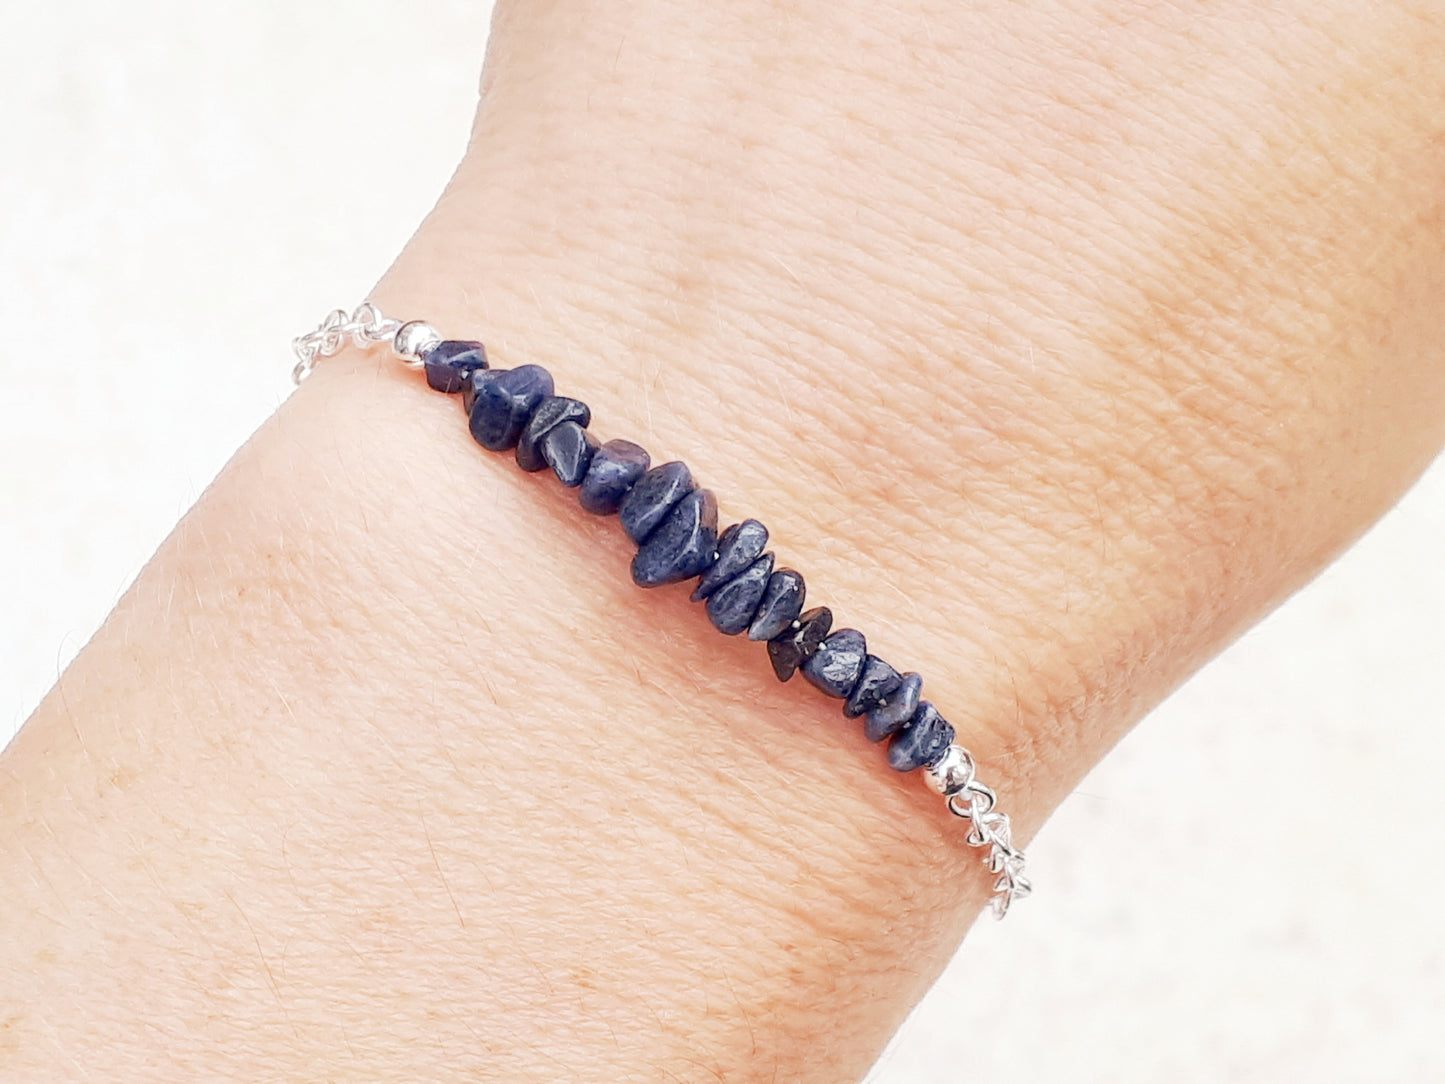 Sapphire adjustable bracelet in sterling silver.